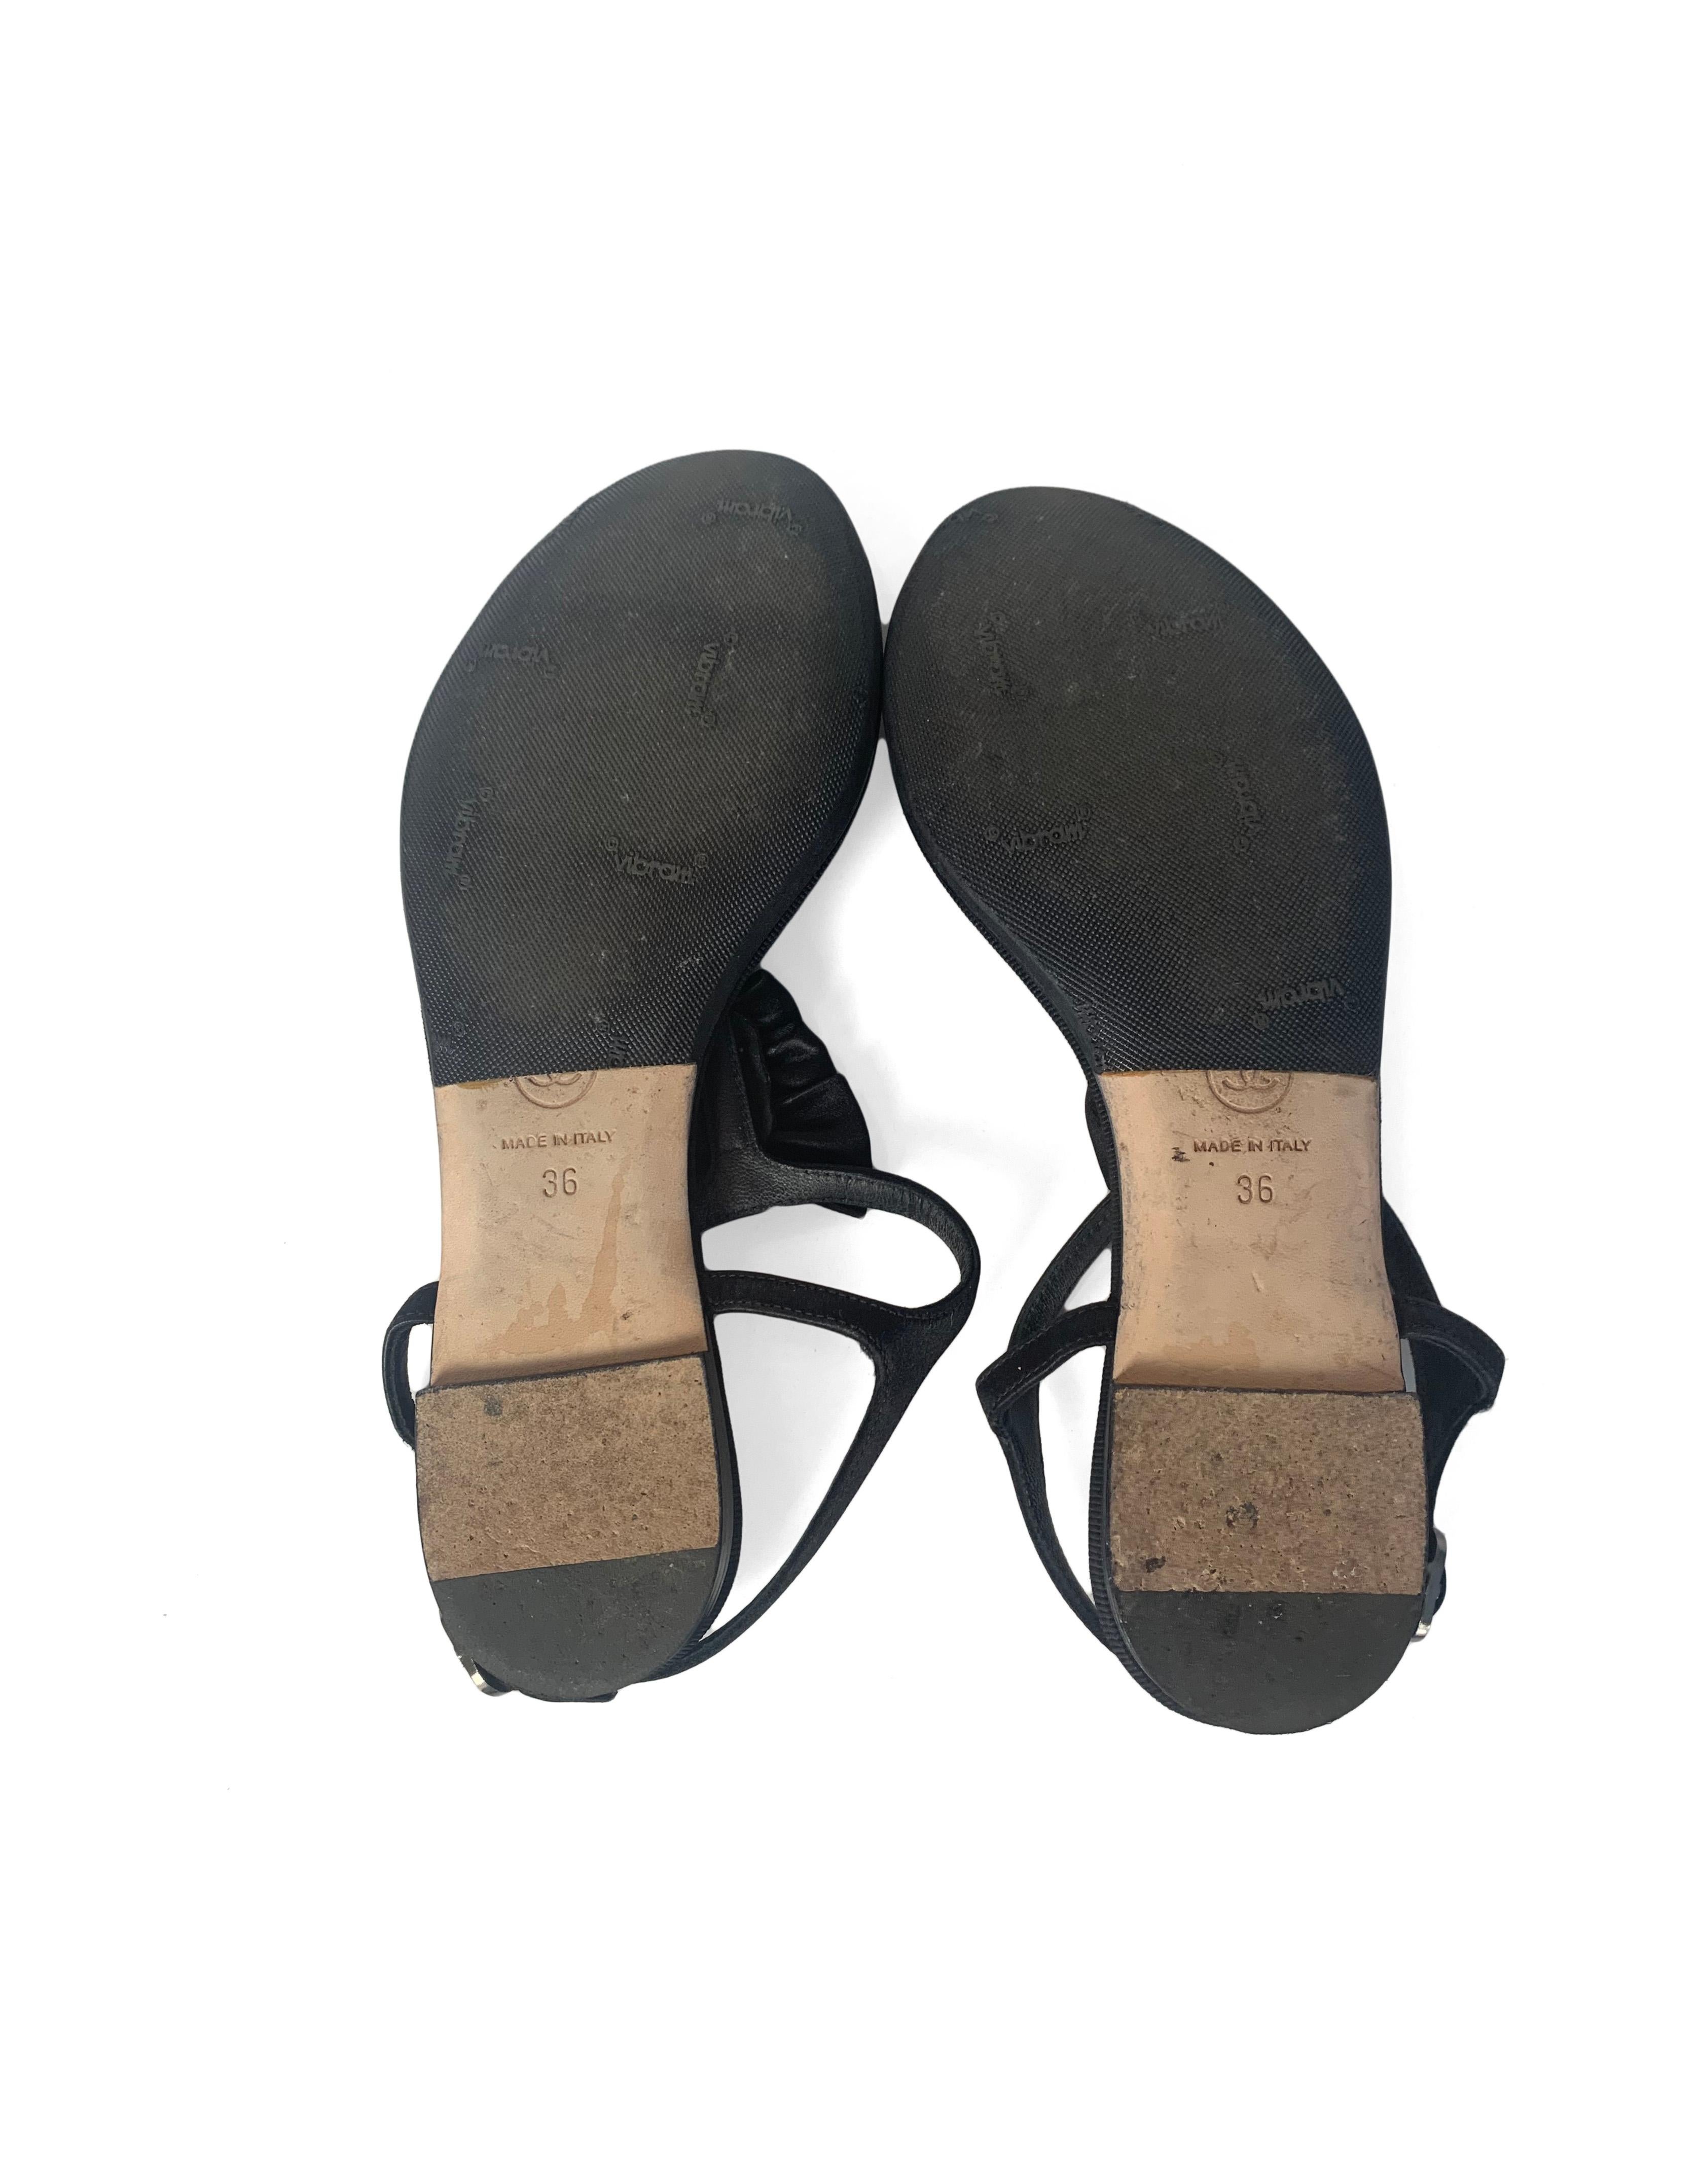 Women's Chanel Black Satin Bow CC Thong Sandals sz 36